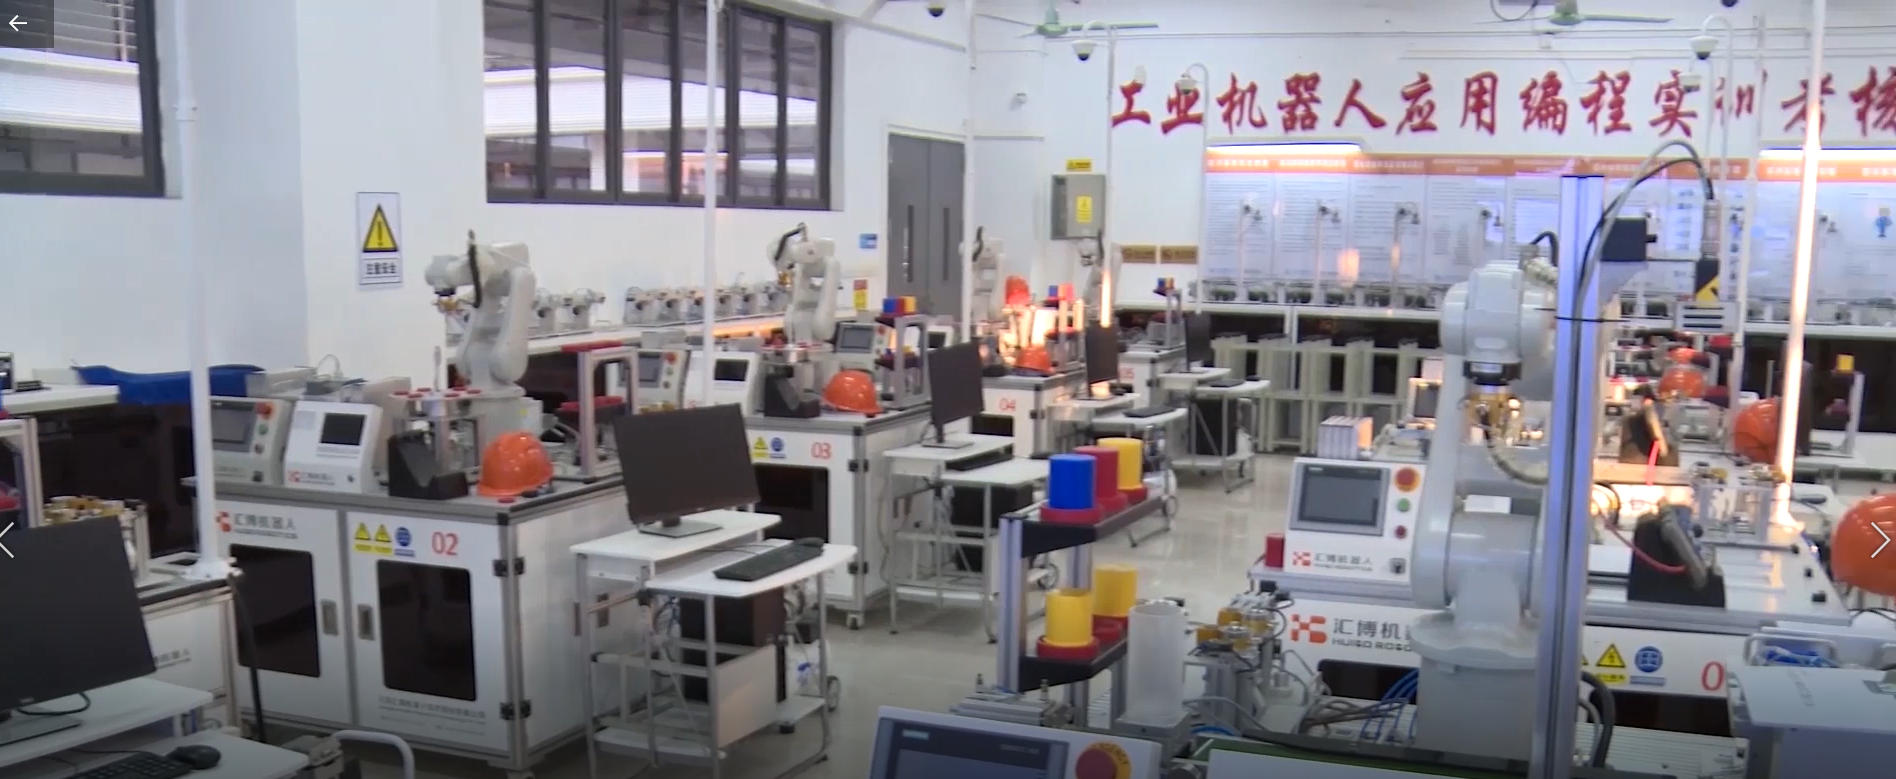 Industrial Robot Training Center